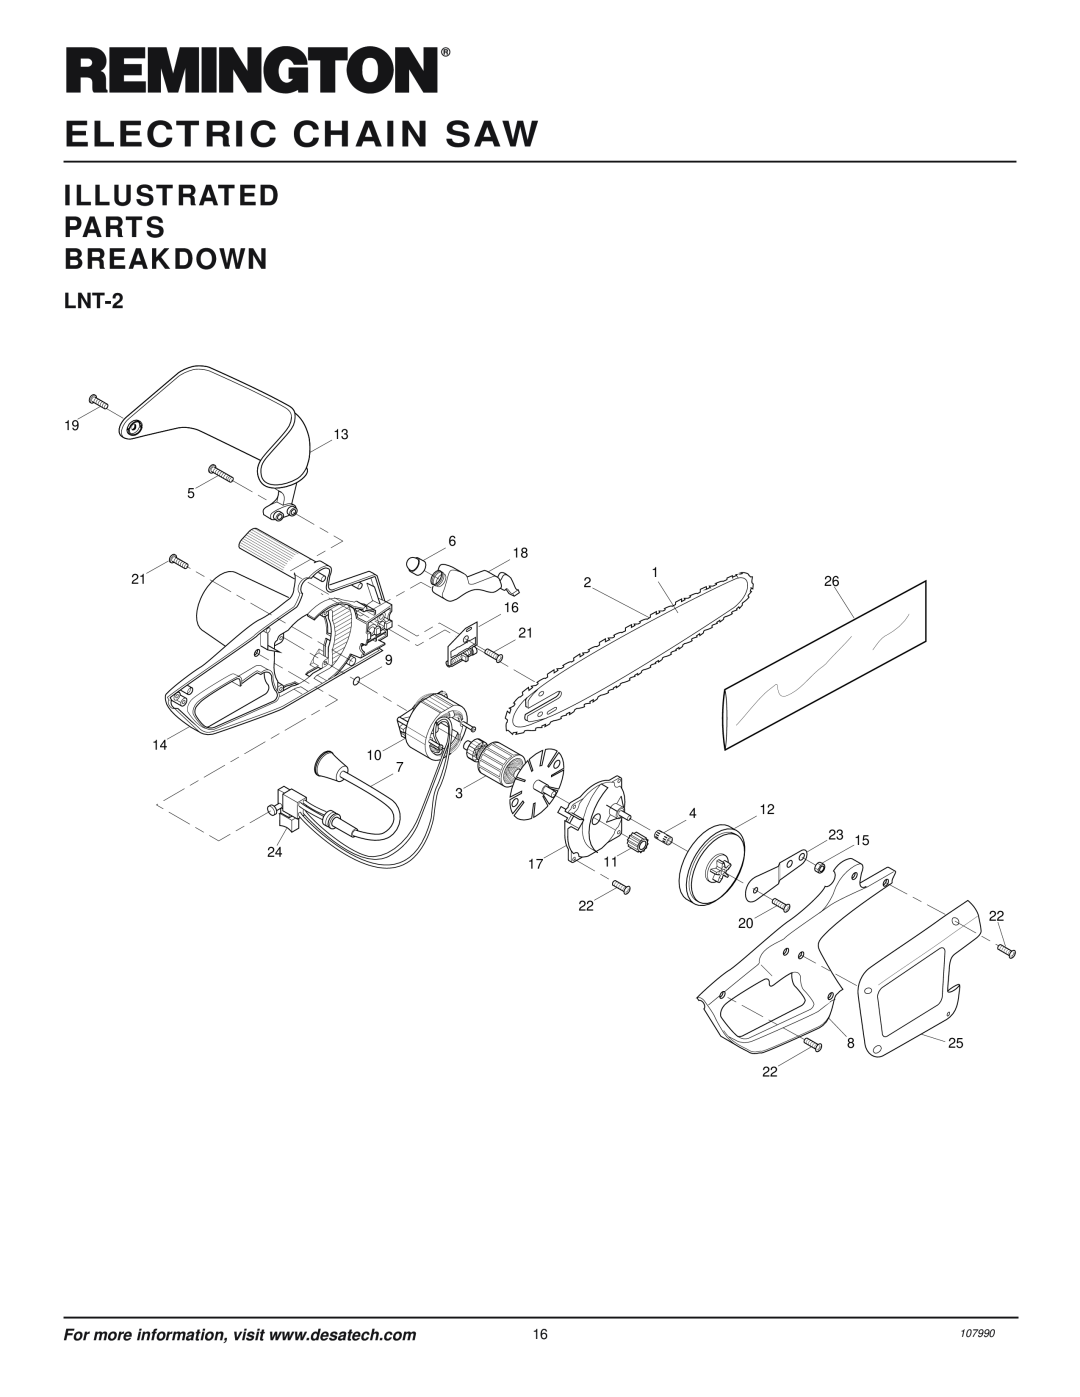 Desa LNT-2: 076728K, 100089-07, & 099039J owner manual Illustrated Parts Breakdown, Electric Chain Saw, 107990 